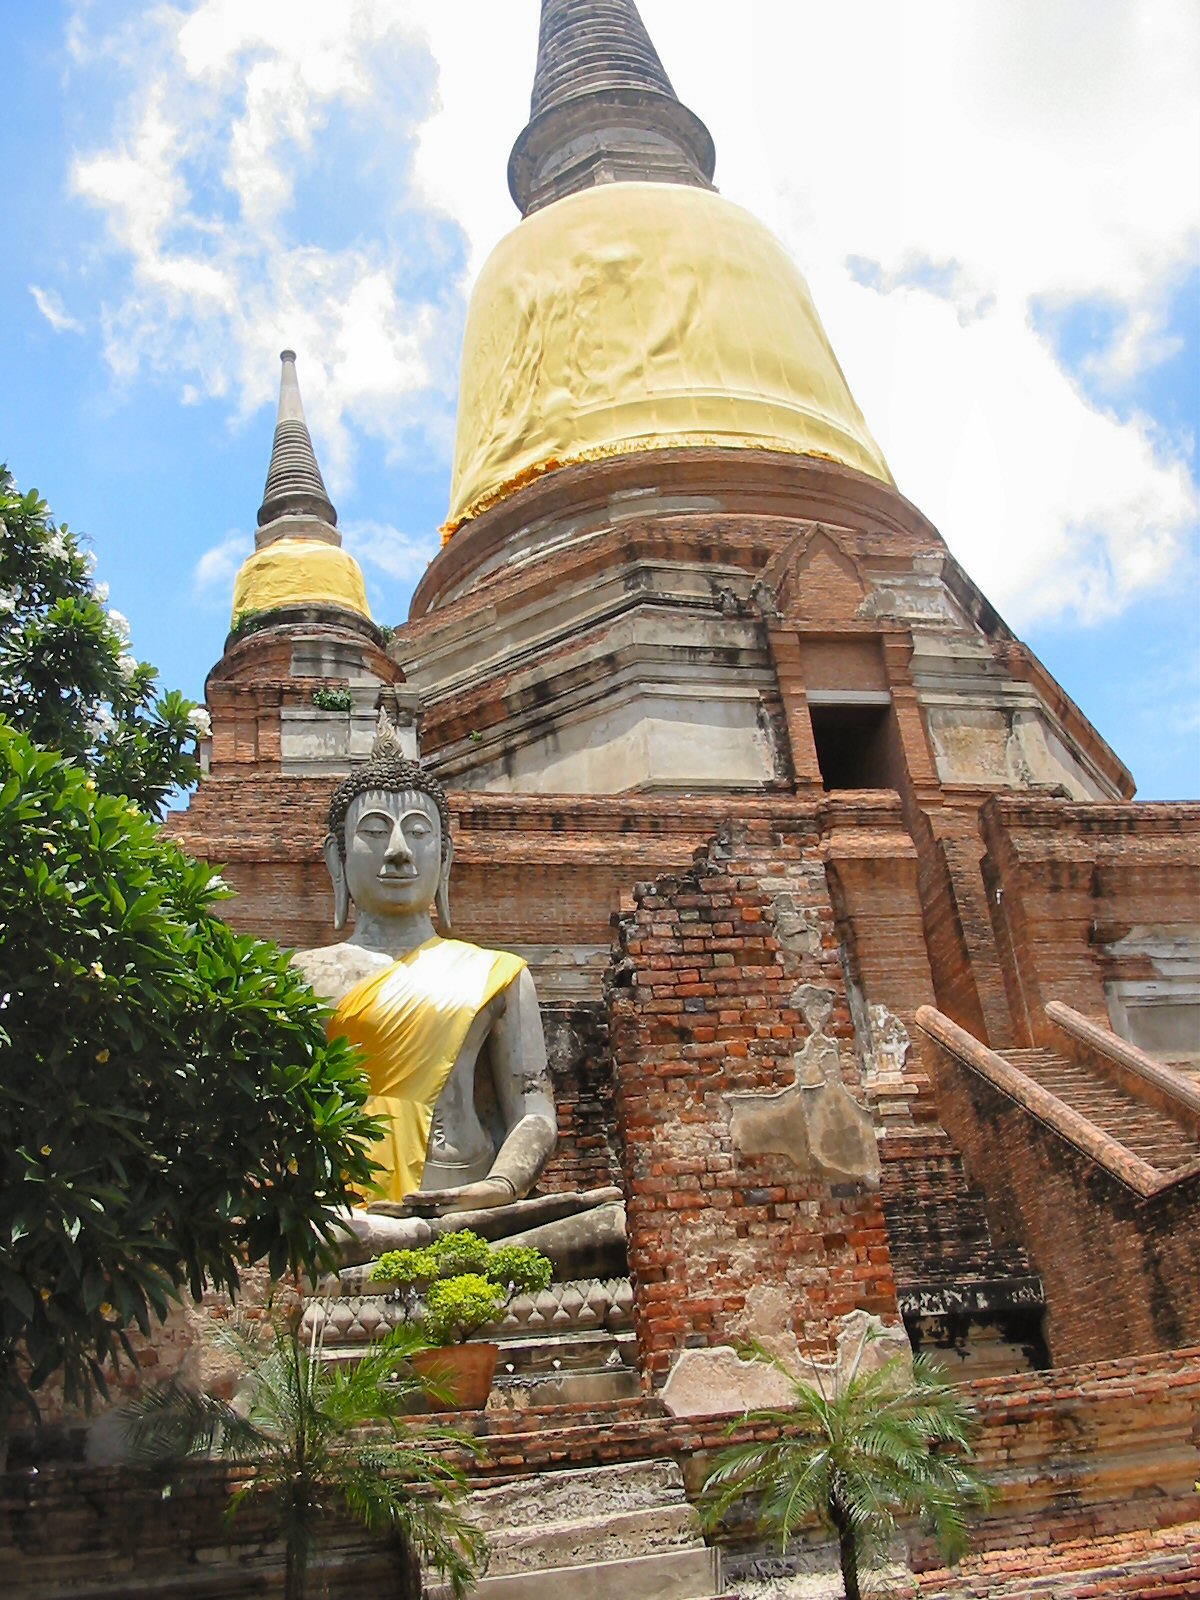 a very big buddha statue near some plants and rocks